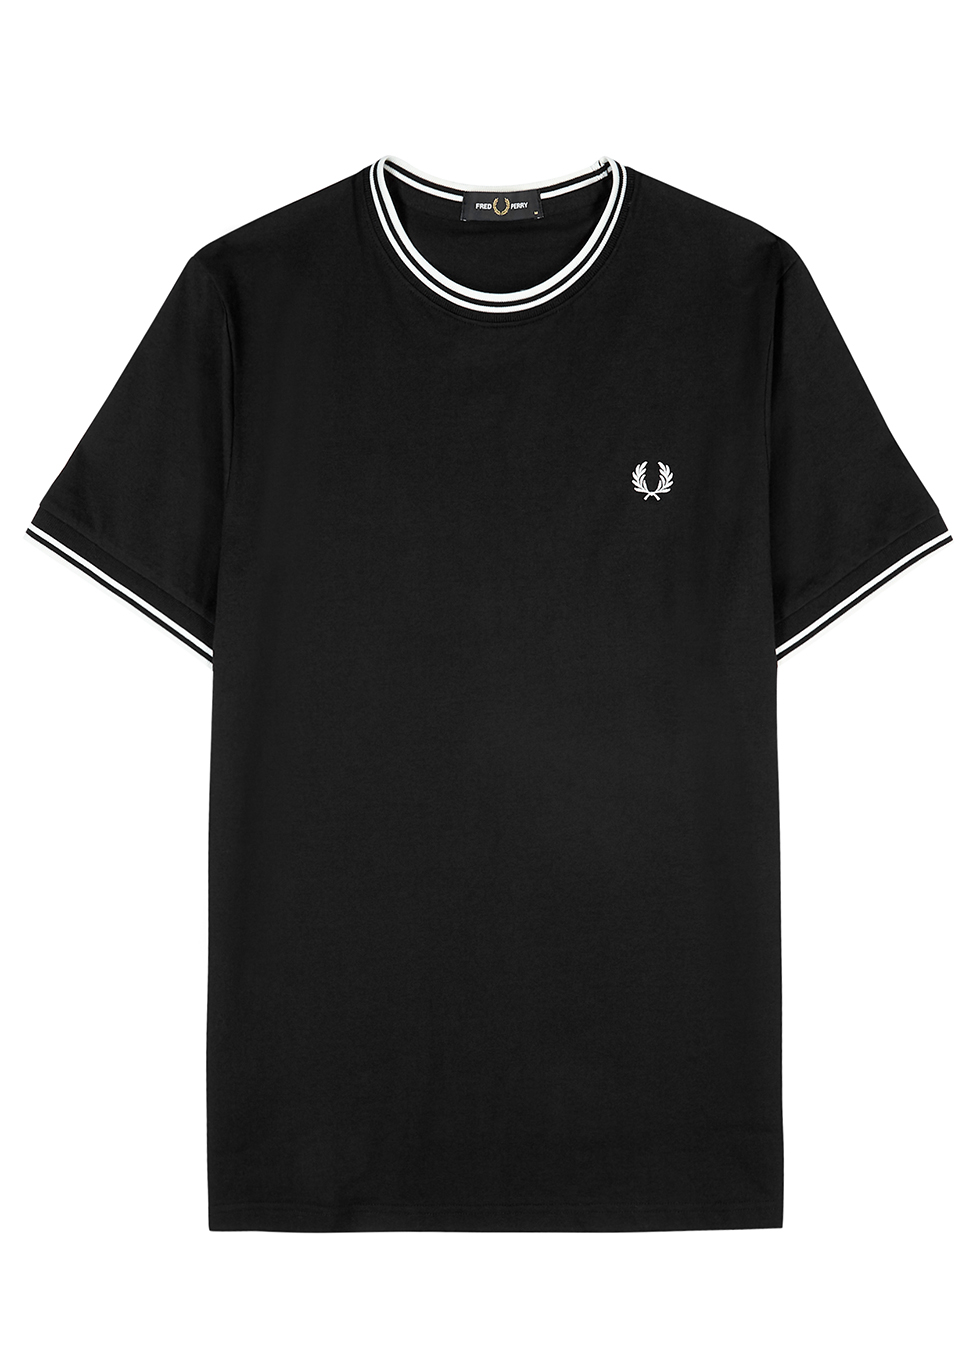 M1588 black cotton T-shirt | SportSpyder